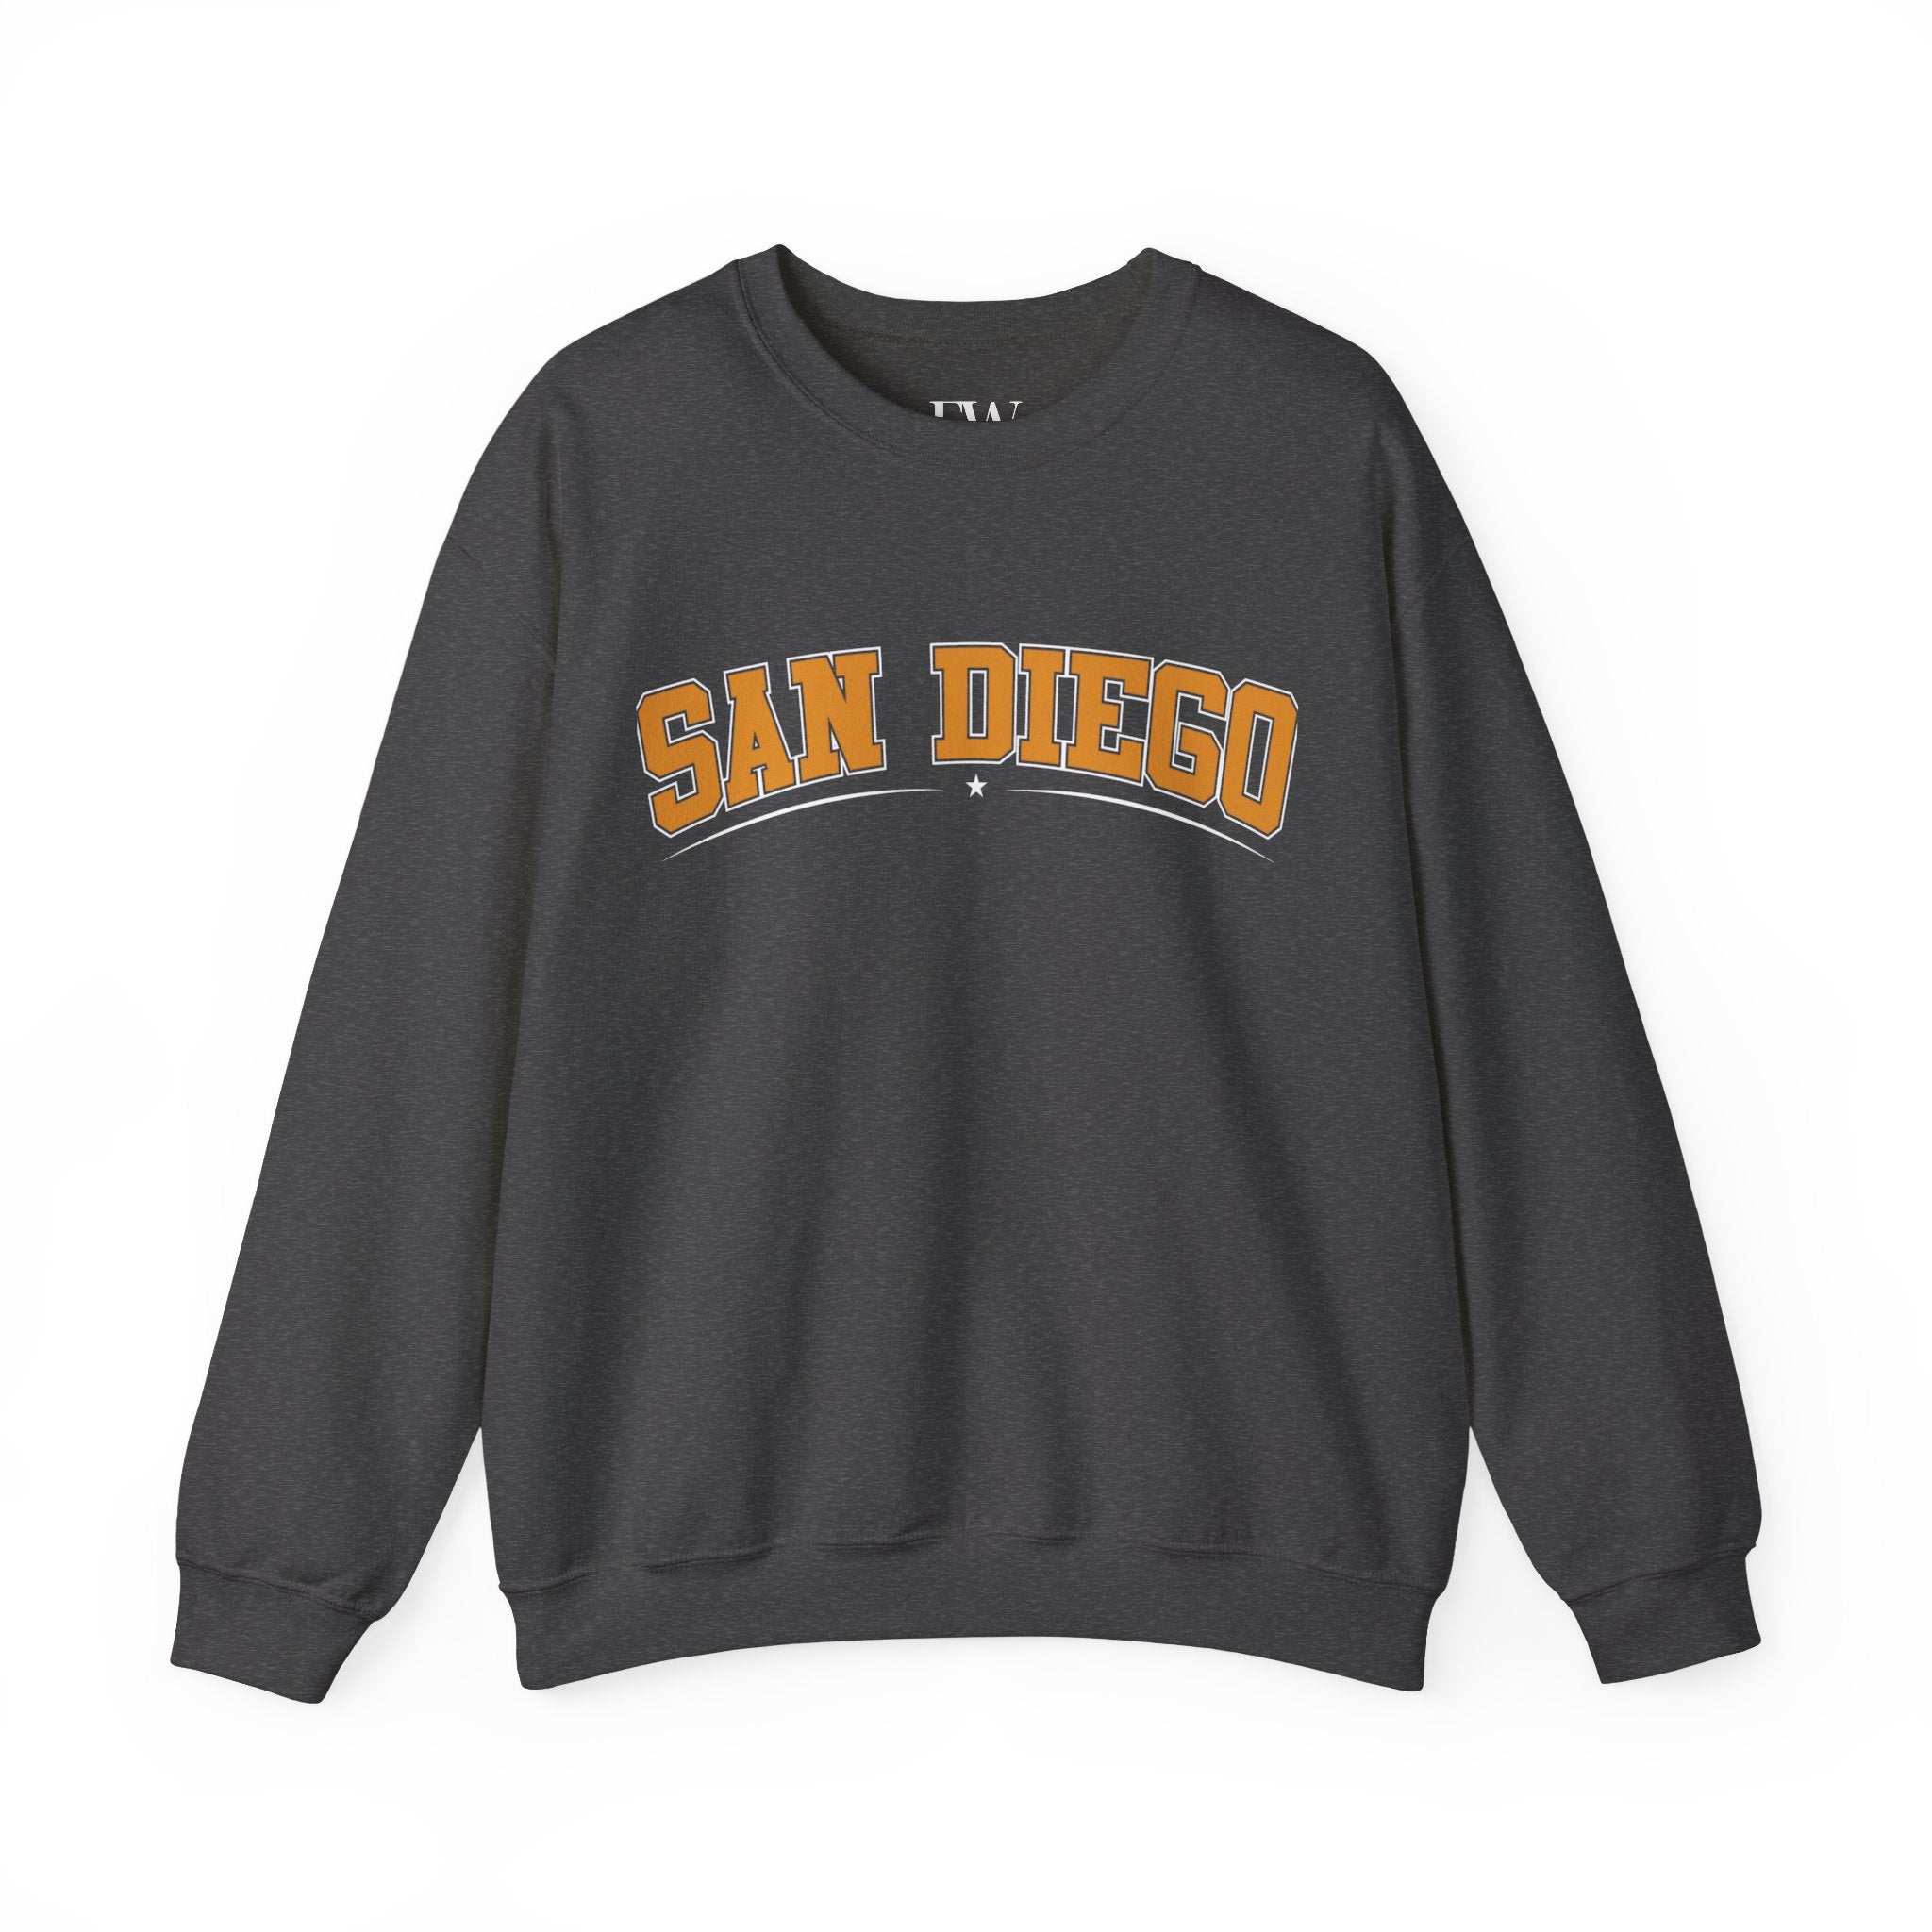 San Diego Sweatshirt